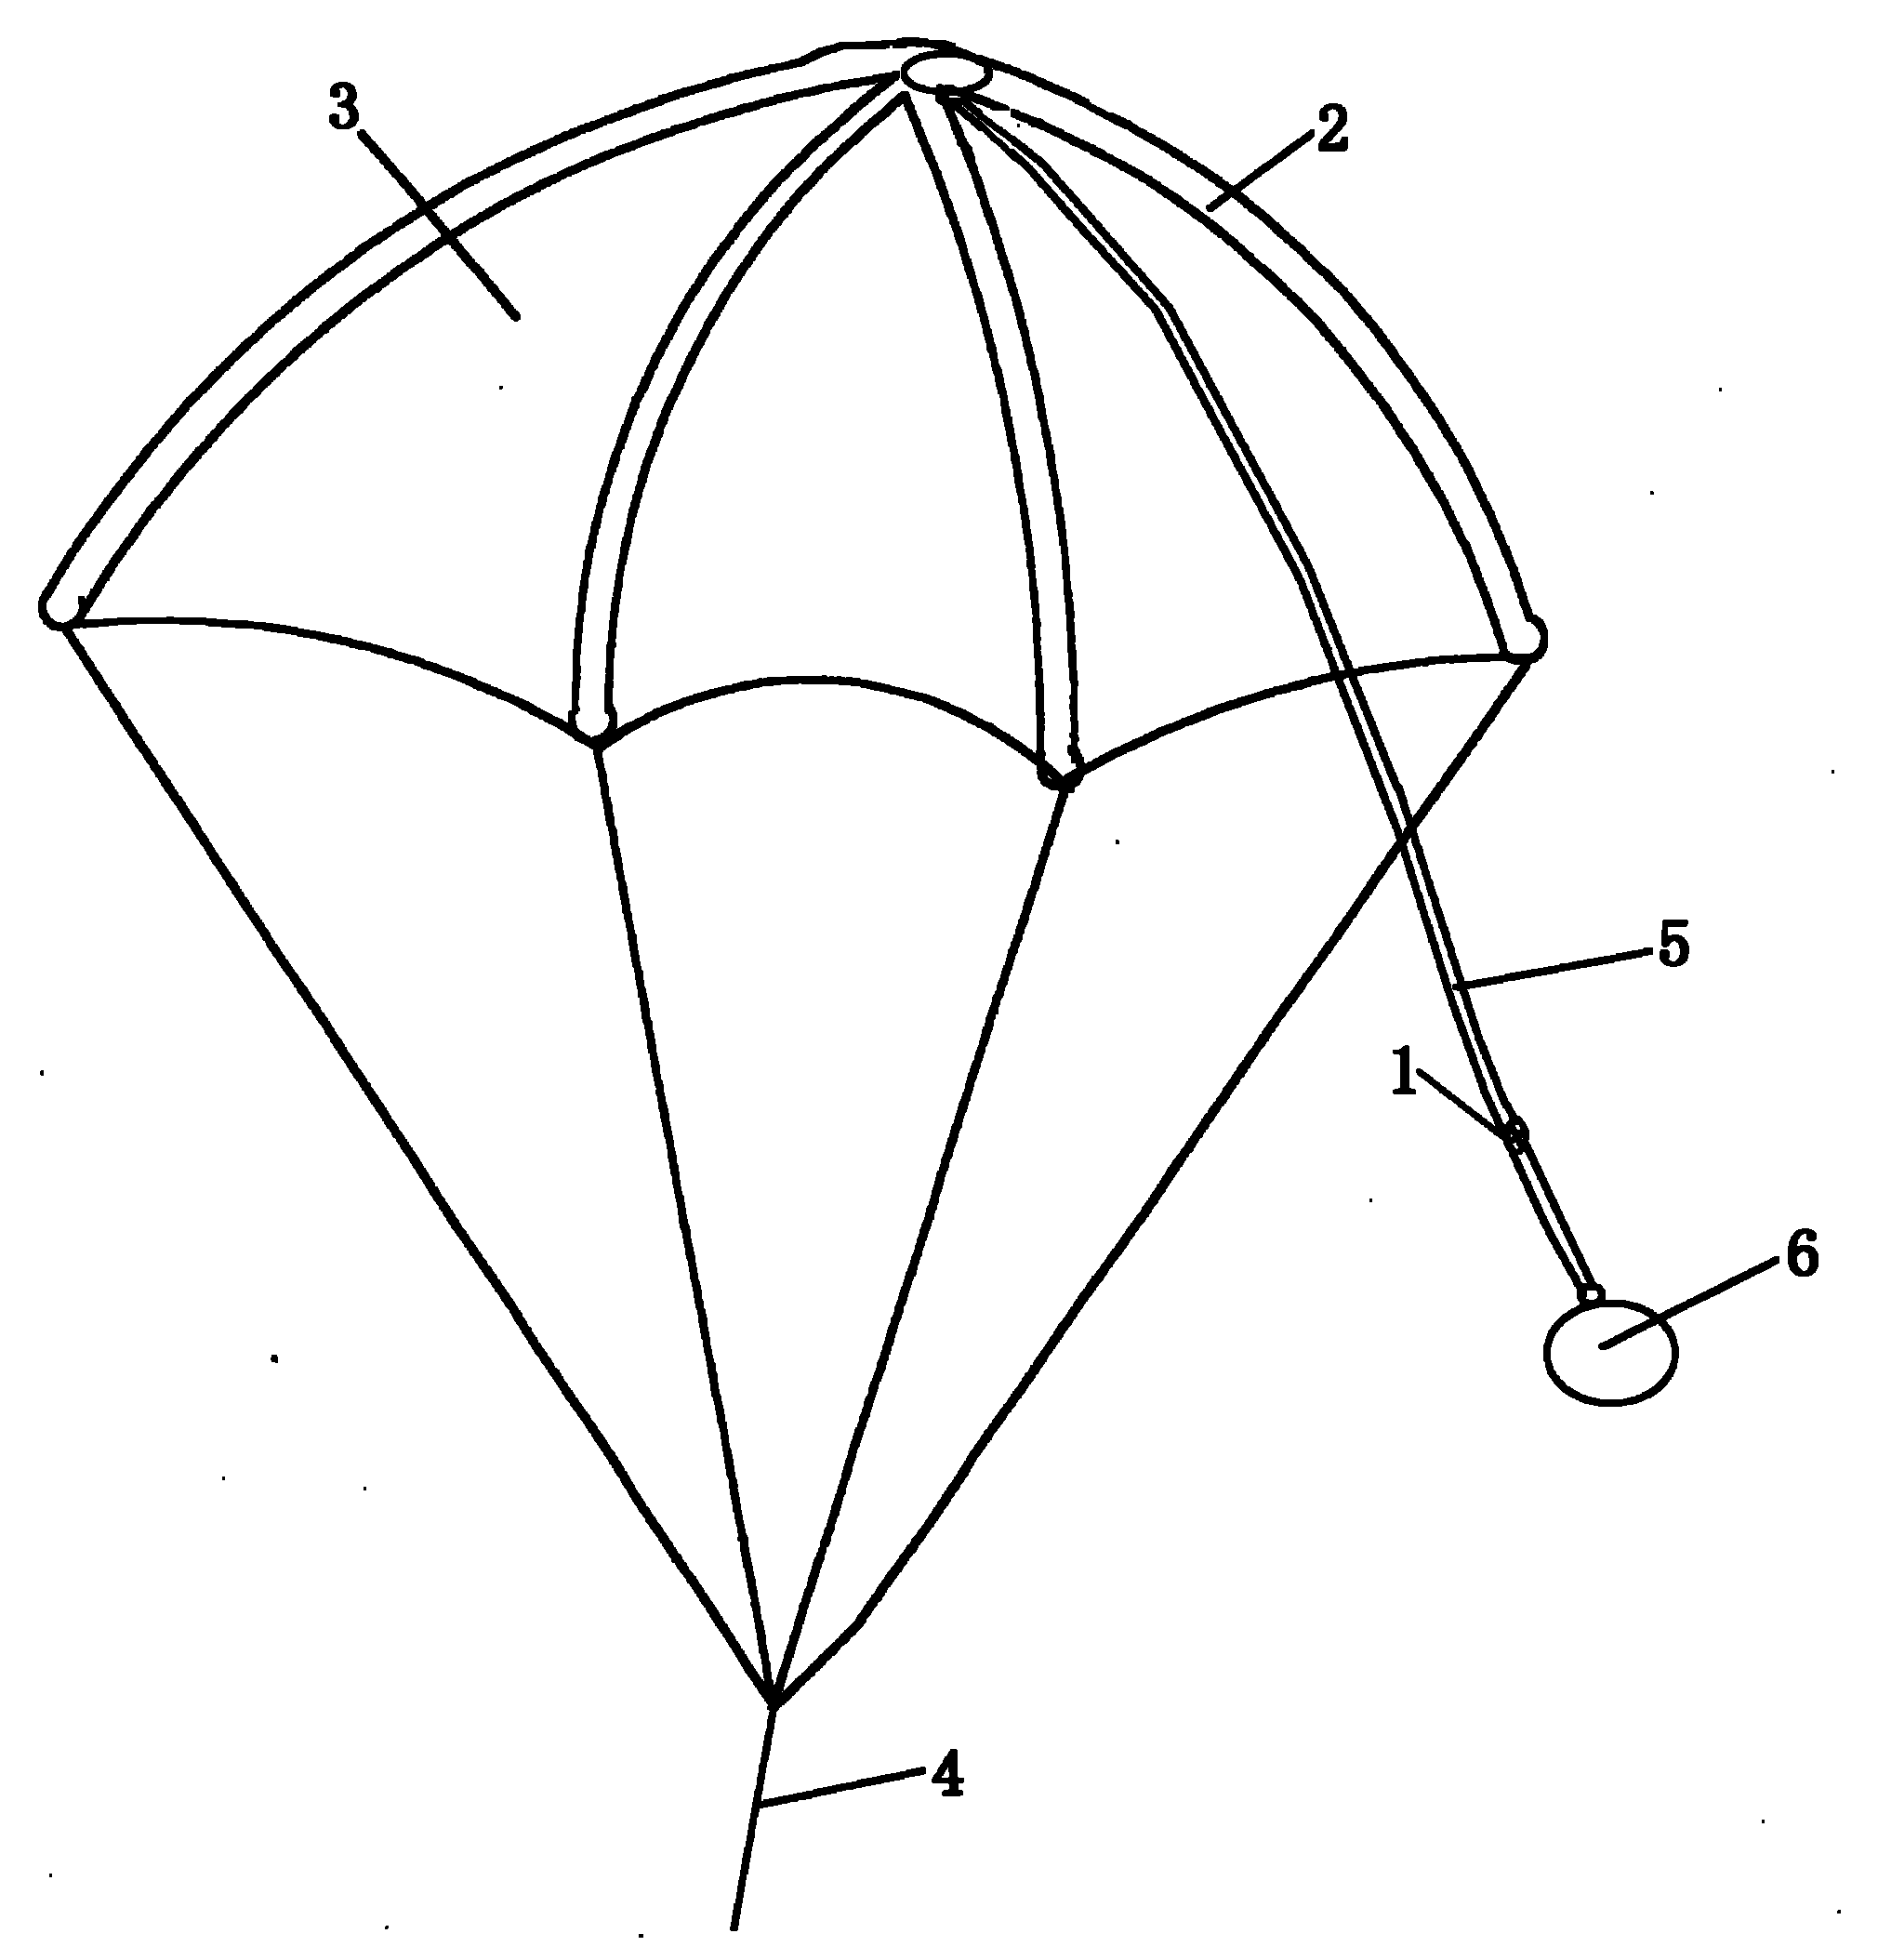 Low altitude lifesaving parachute